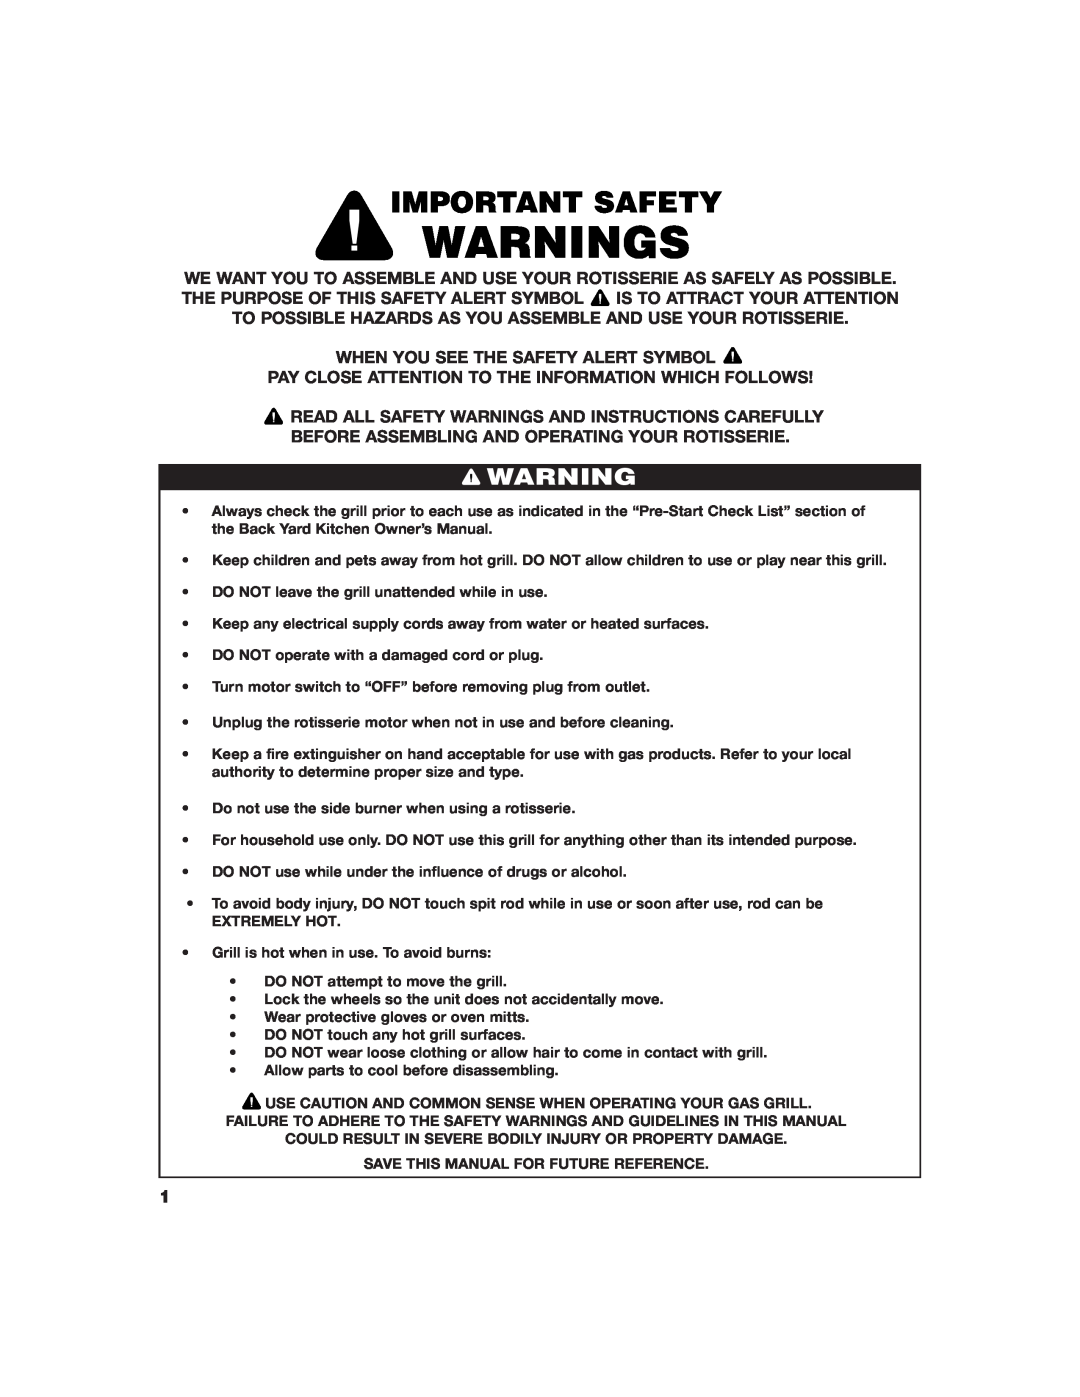 Brinkmann ROTISSERIE owner manual Warnings, Important Safety 